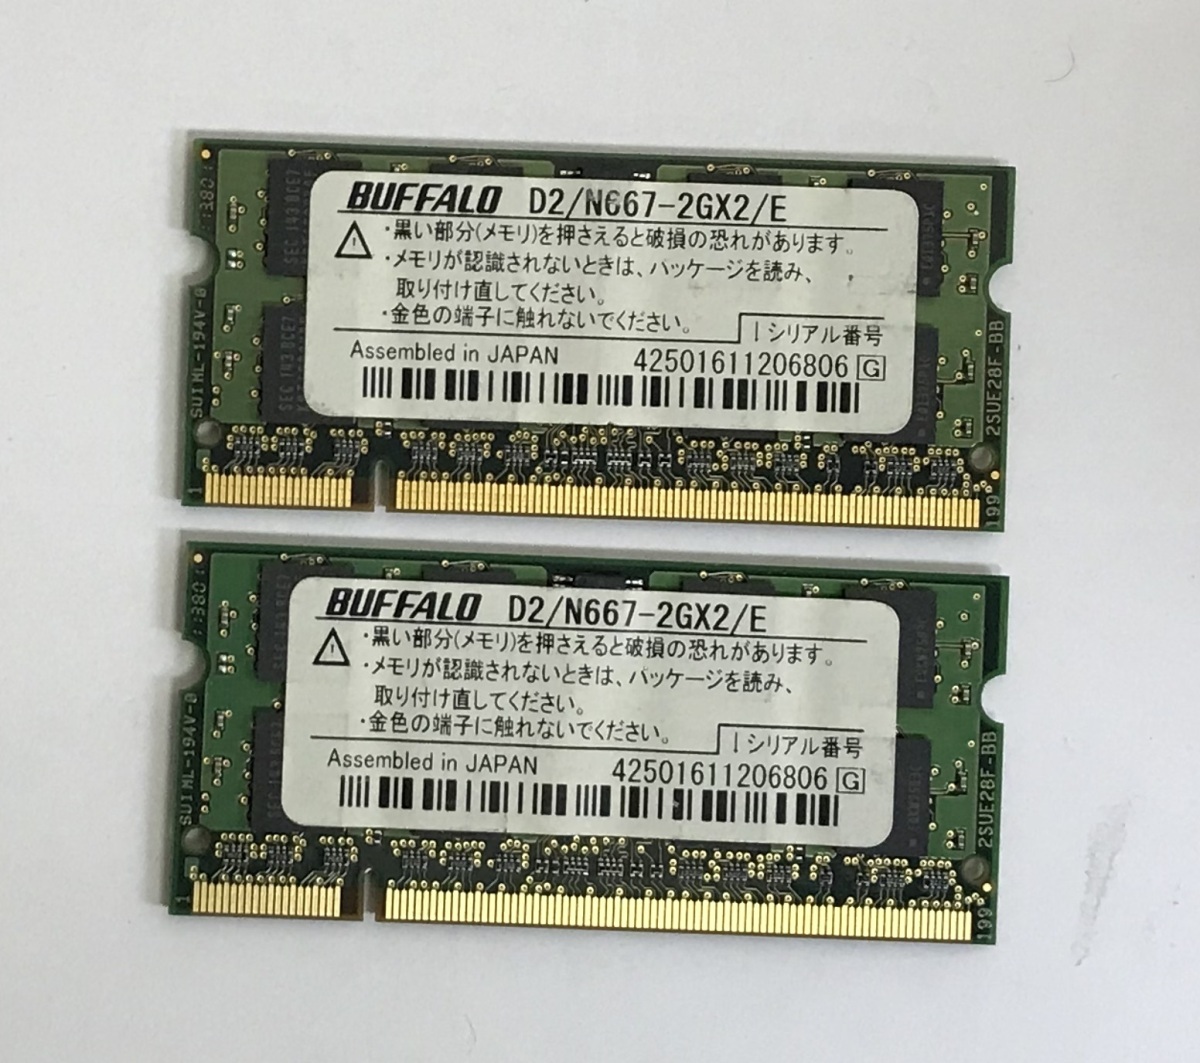 BUFFALO D2/N667 PC2-5300 4GB 2GB 2枚で4GB DDR2 667/666 2GB2枚 200ピン ECC無し DDR2  ノート用メモリ DDR2 LAPTOP RAM(2GB)｜売買されたオークション情報、ヤフオク! の商品情報をアーカイブ公開 -  オークファン（aucfan.com）